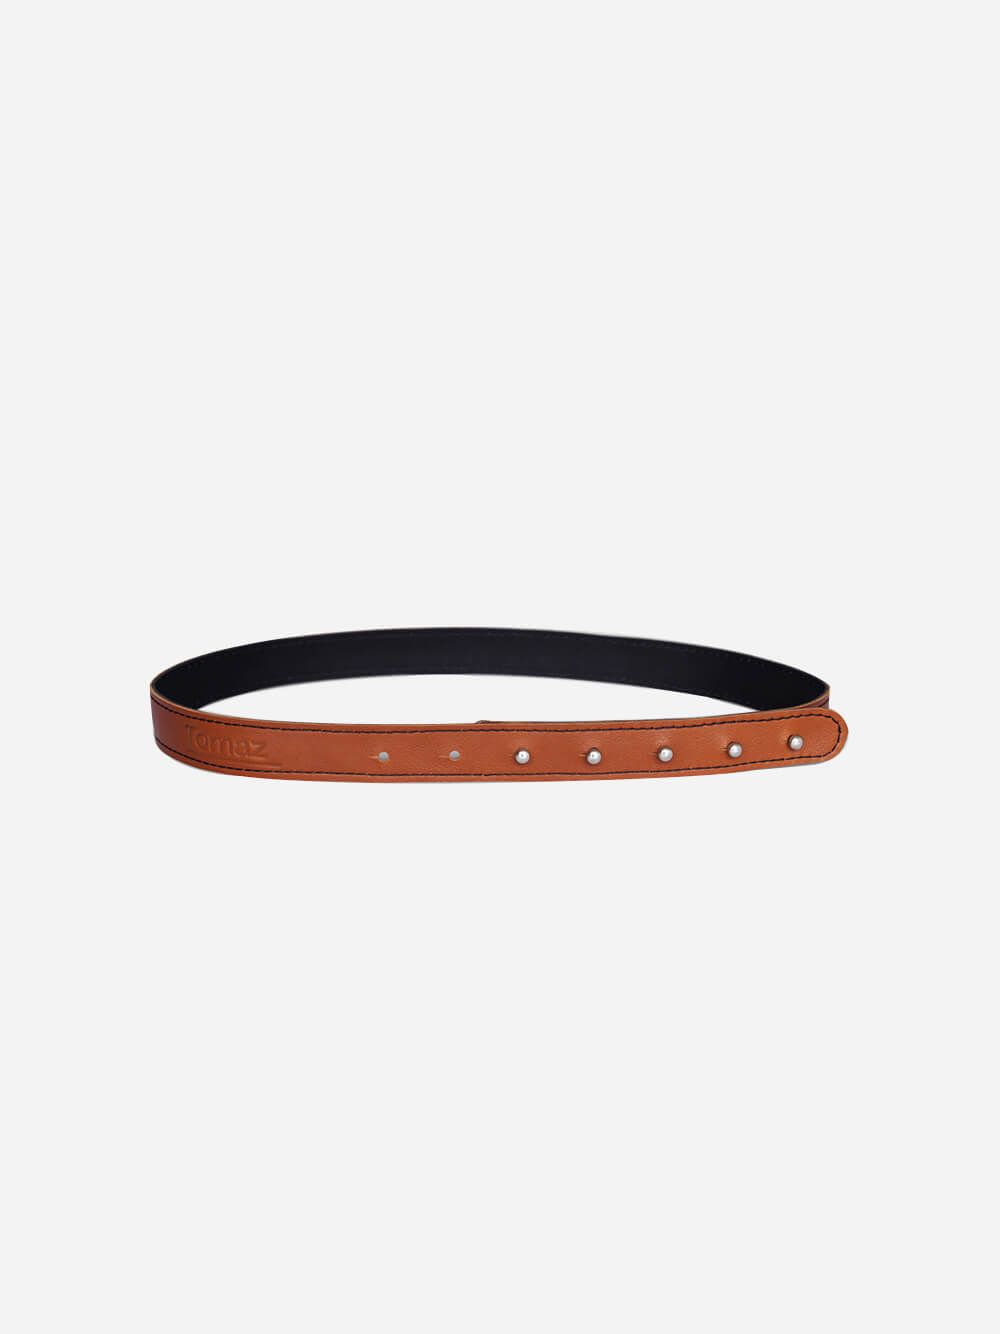 Francis Leather Brown Belt | Tomaz